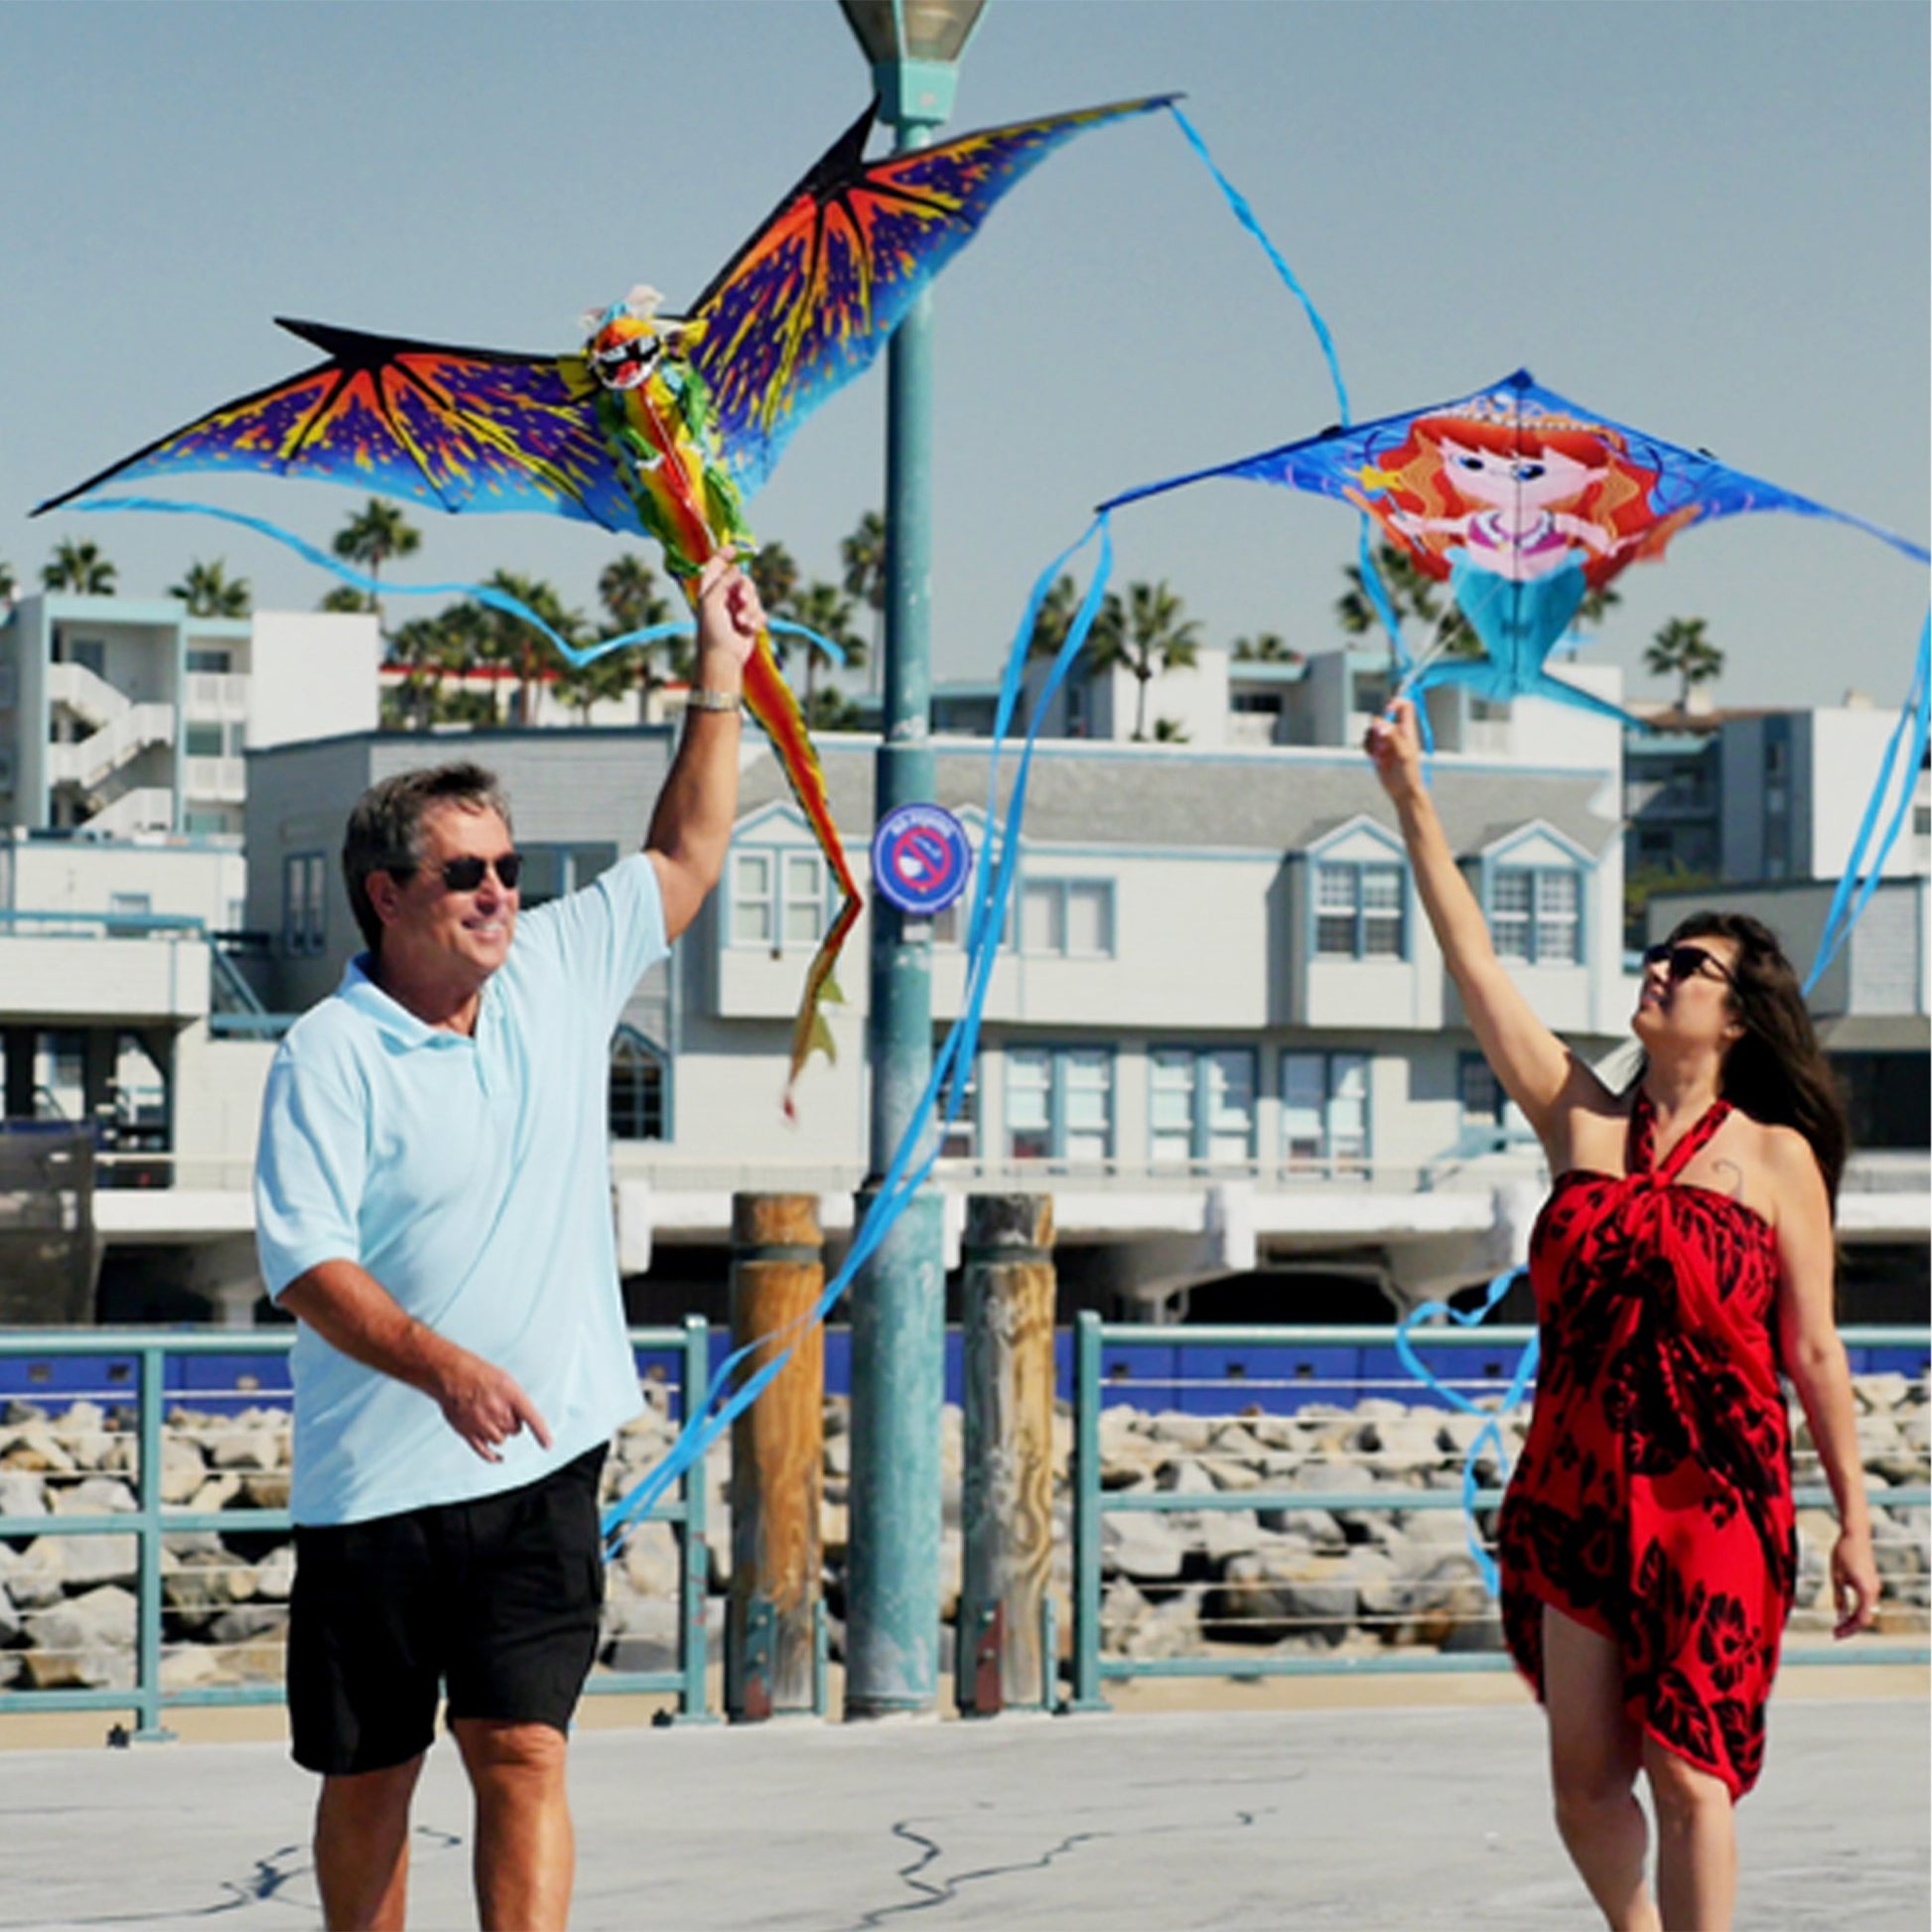 couple flying 3d dragon kite and mermaid kite ate the beach